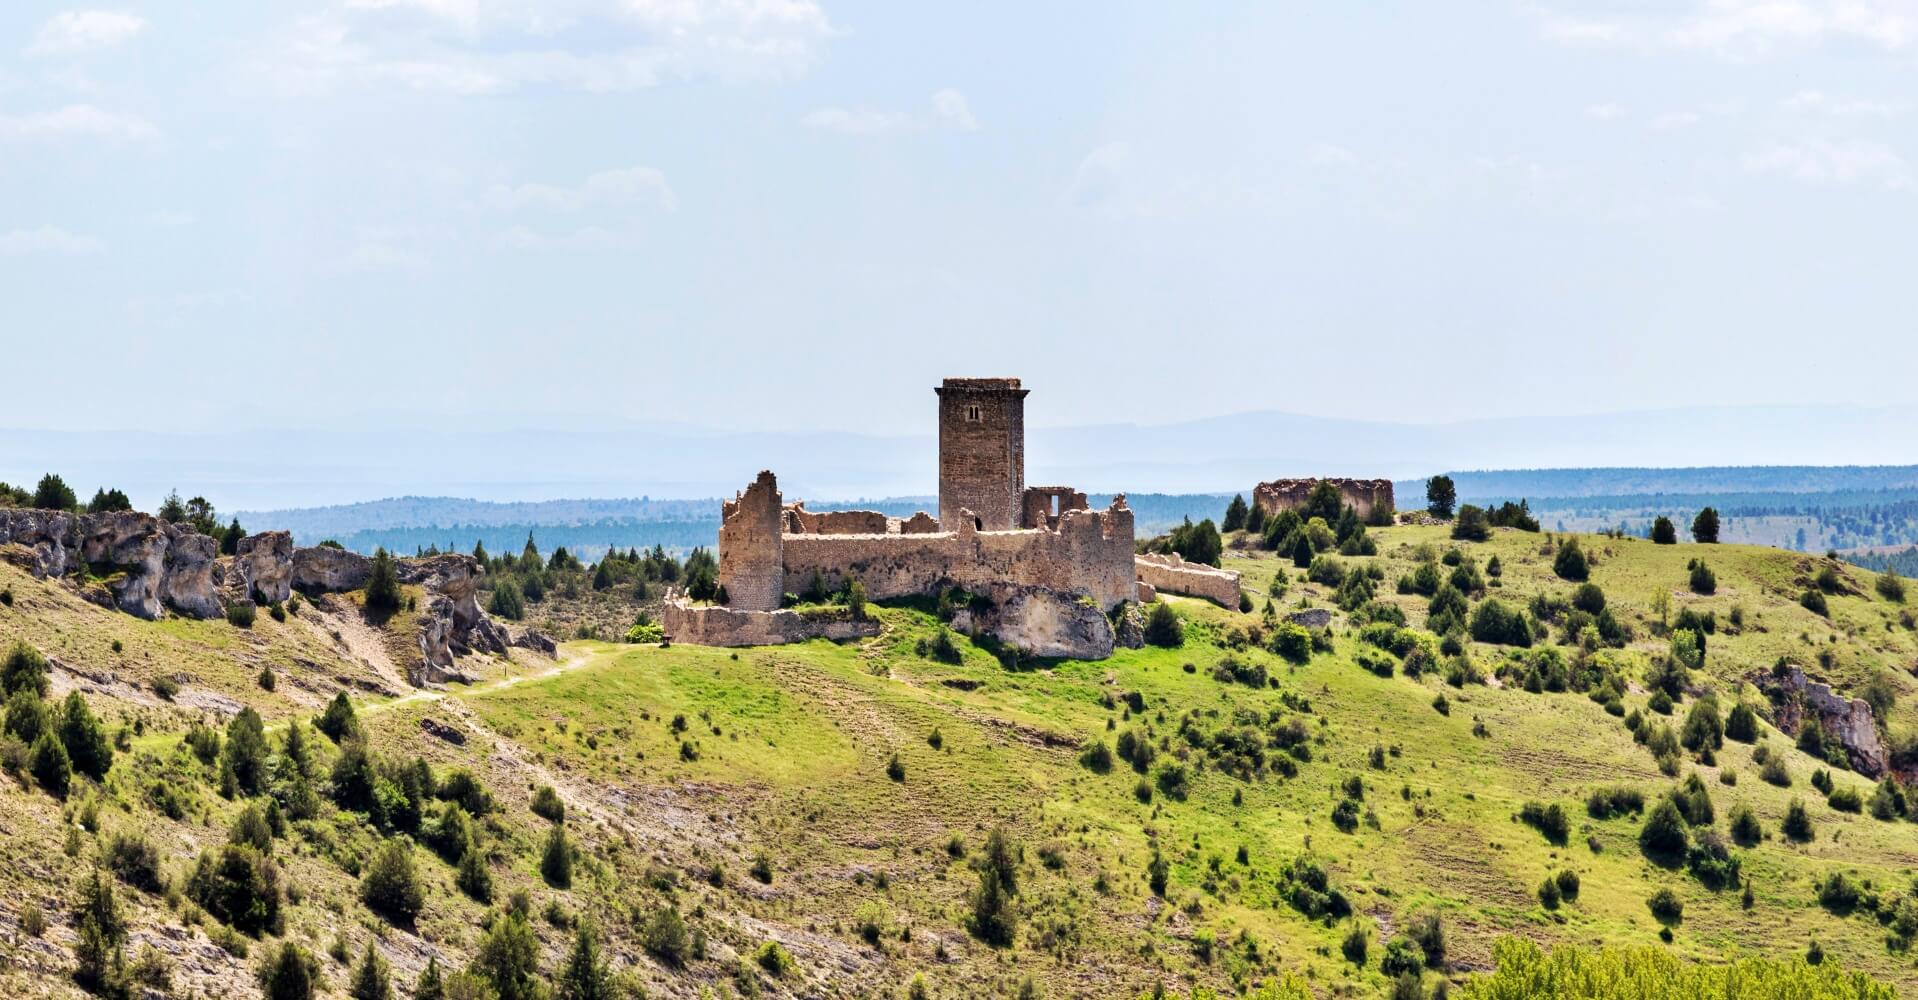 Castle of Ucero